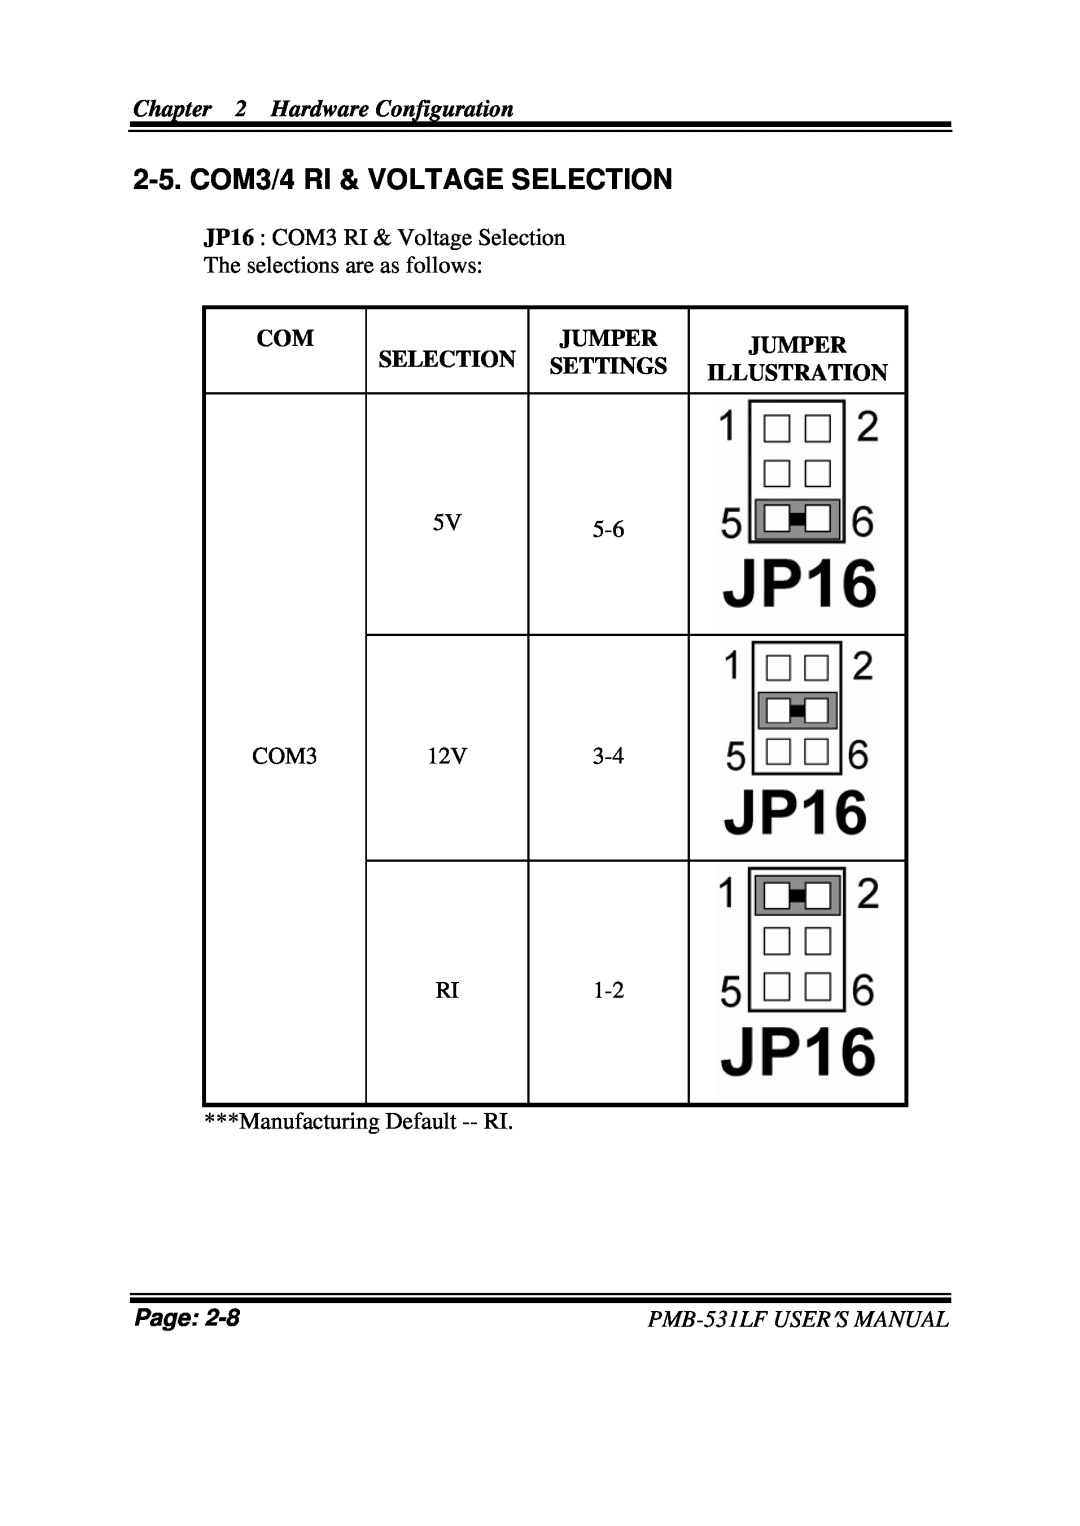 Intel PMB-531LF 2-5.COM3/4 RI & VOLTAGE SELECTION, Jumper Selection Settings, Jumper Illustration, Hardware Configuration 